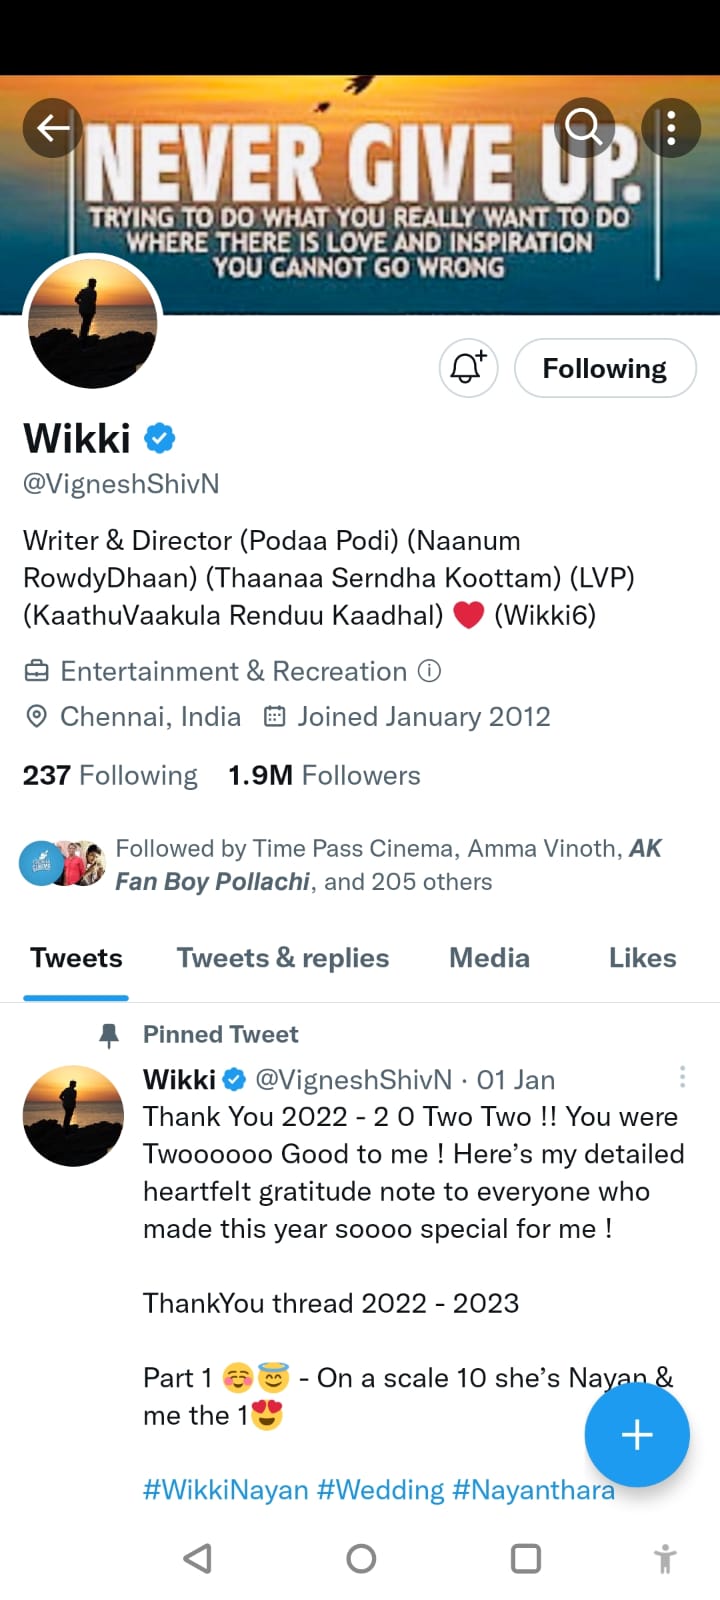 Director Vignesh Shivan has removed AK62 from his Twitter Bio